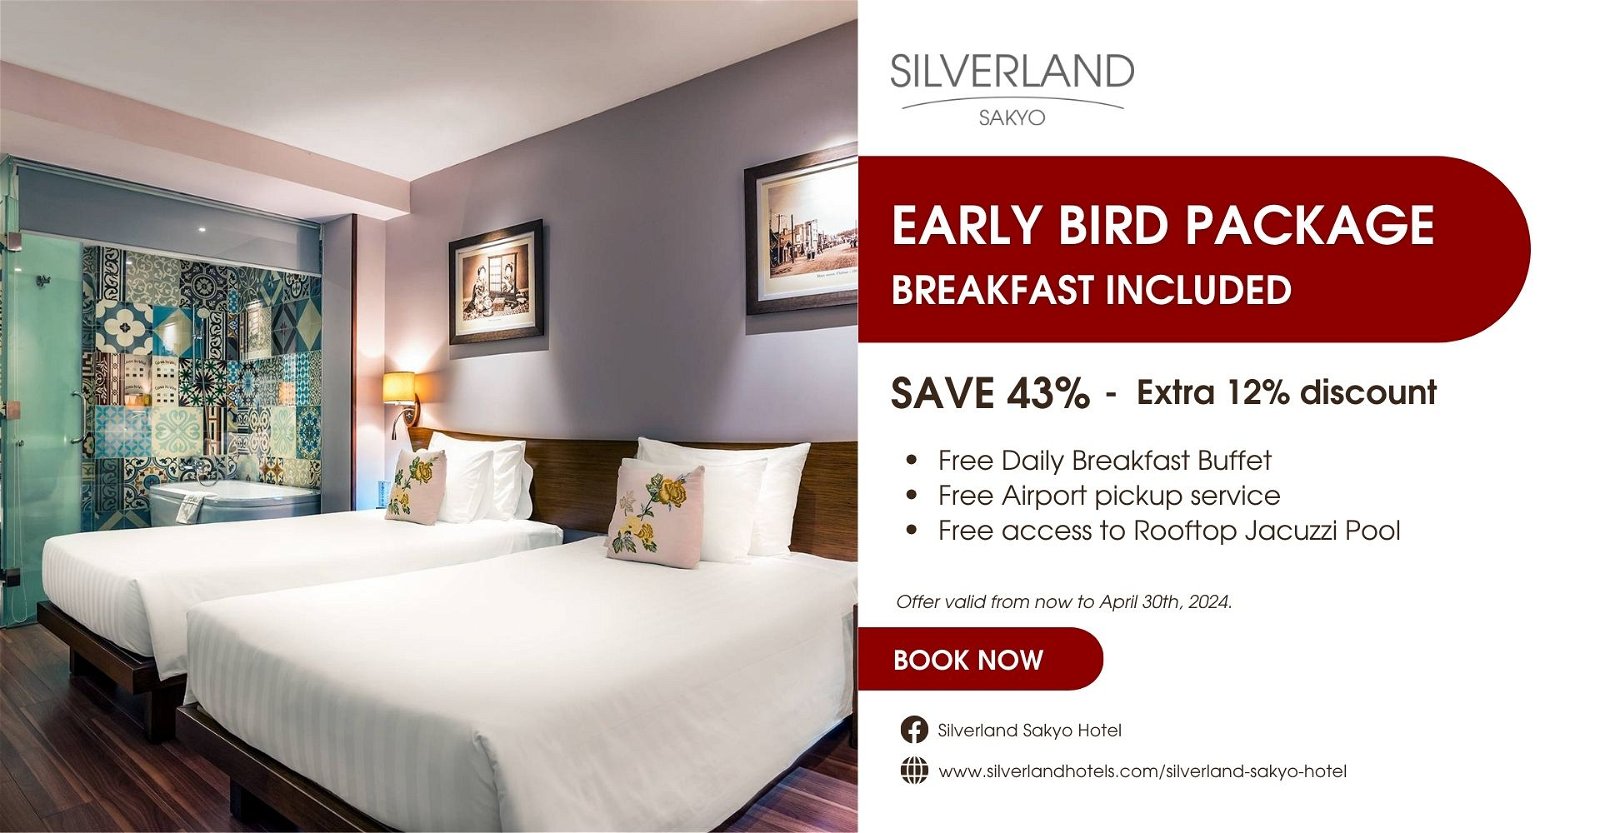 SILVERLAND SAKYO – EARLY BIRD – BREAKFAST INCLUDED (SAVE 43%)